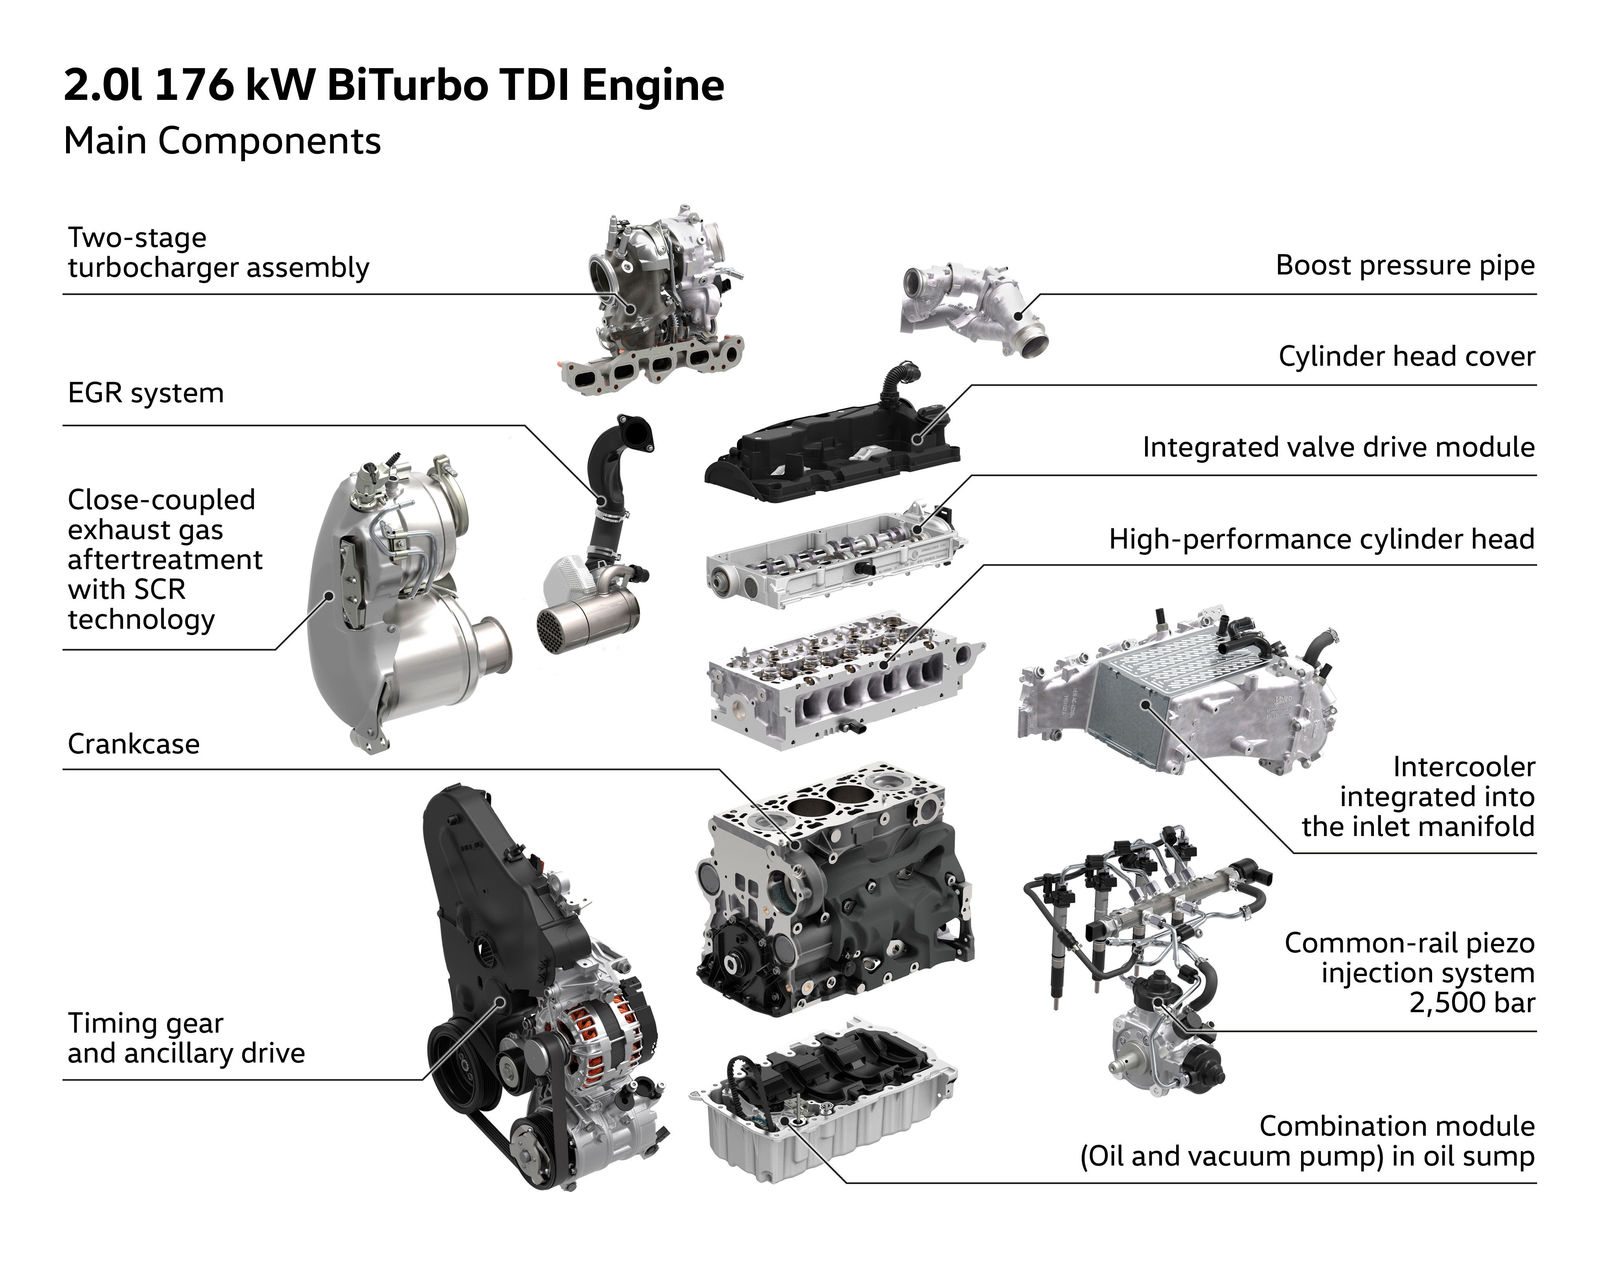 2.0 TDI Biturbo engine with 176 kW / 240 PS